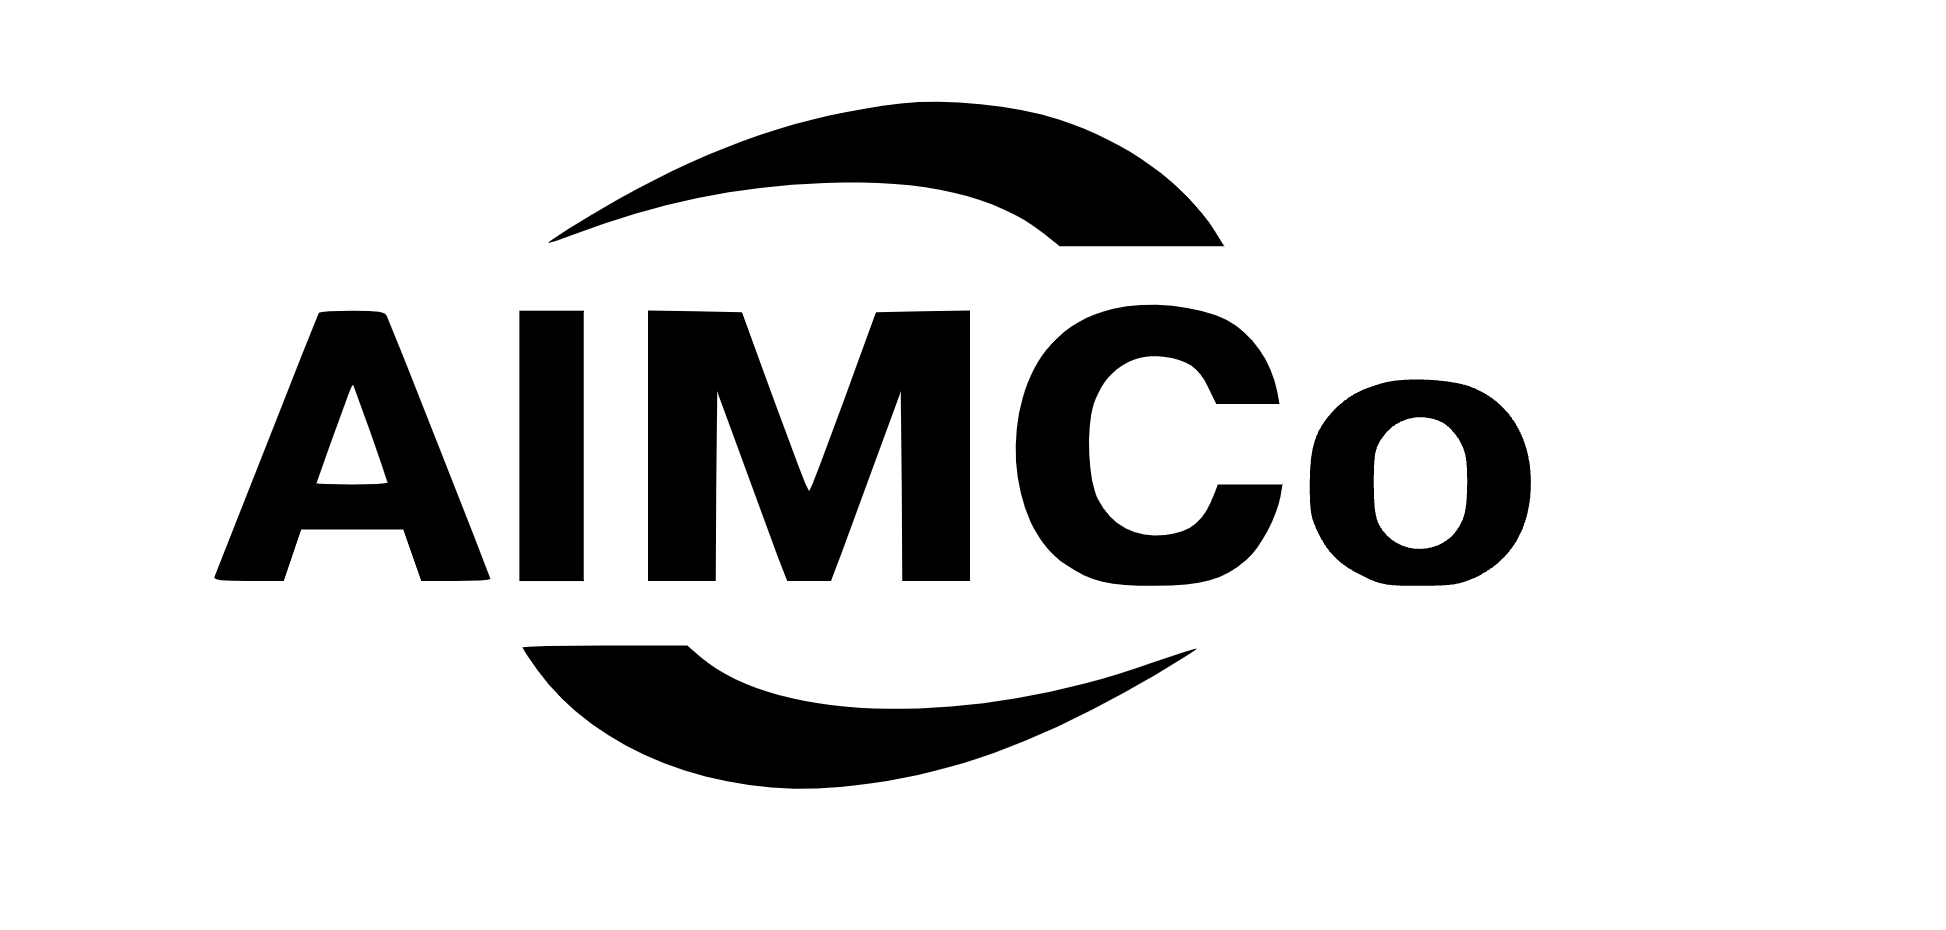 Aimco company logo